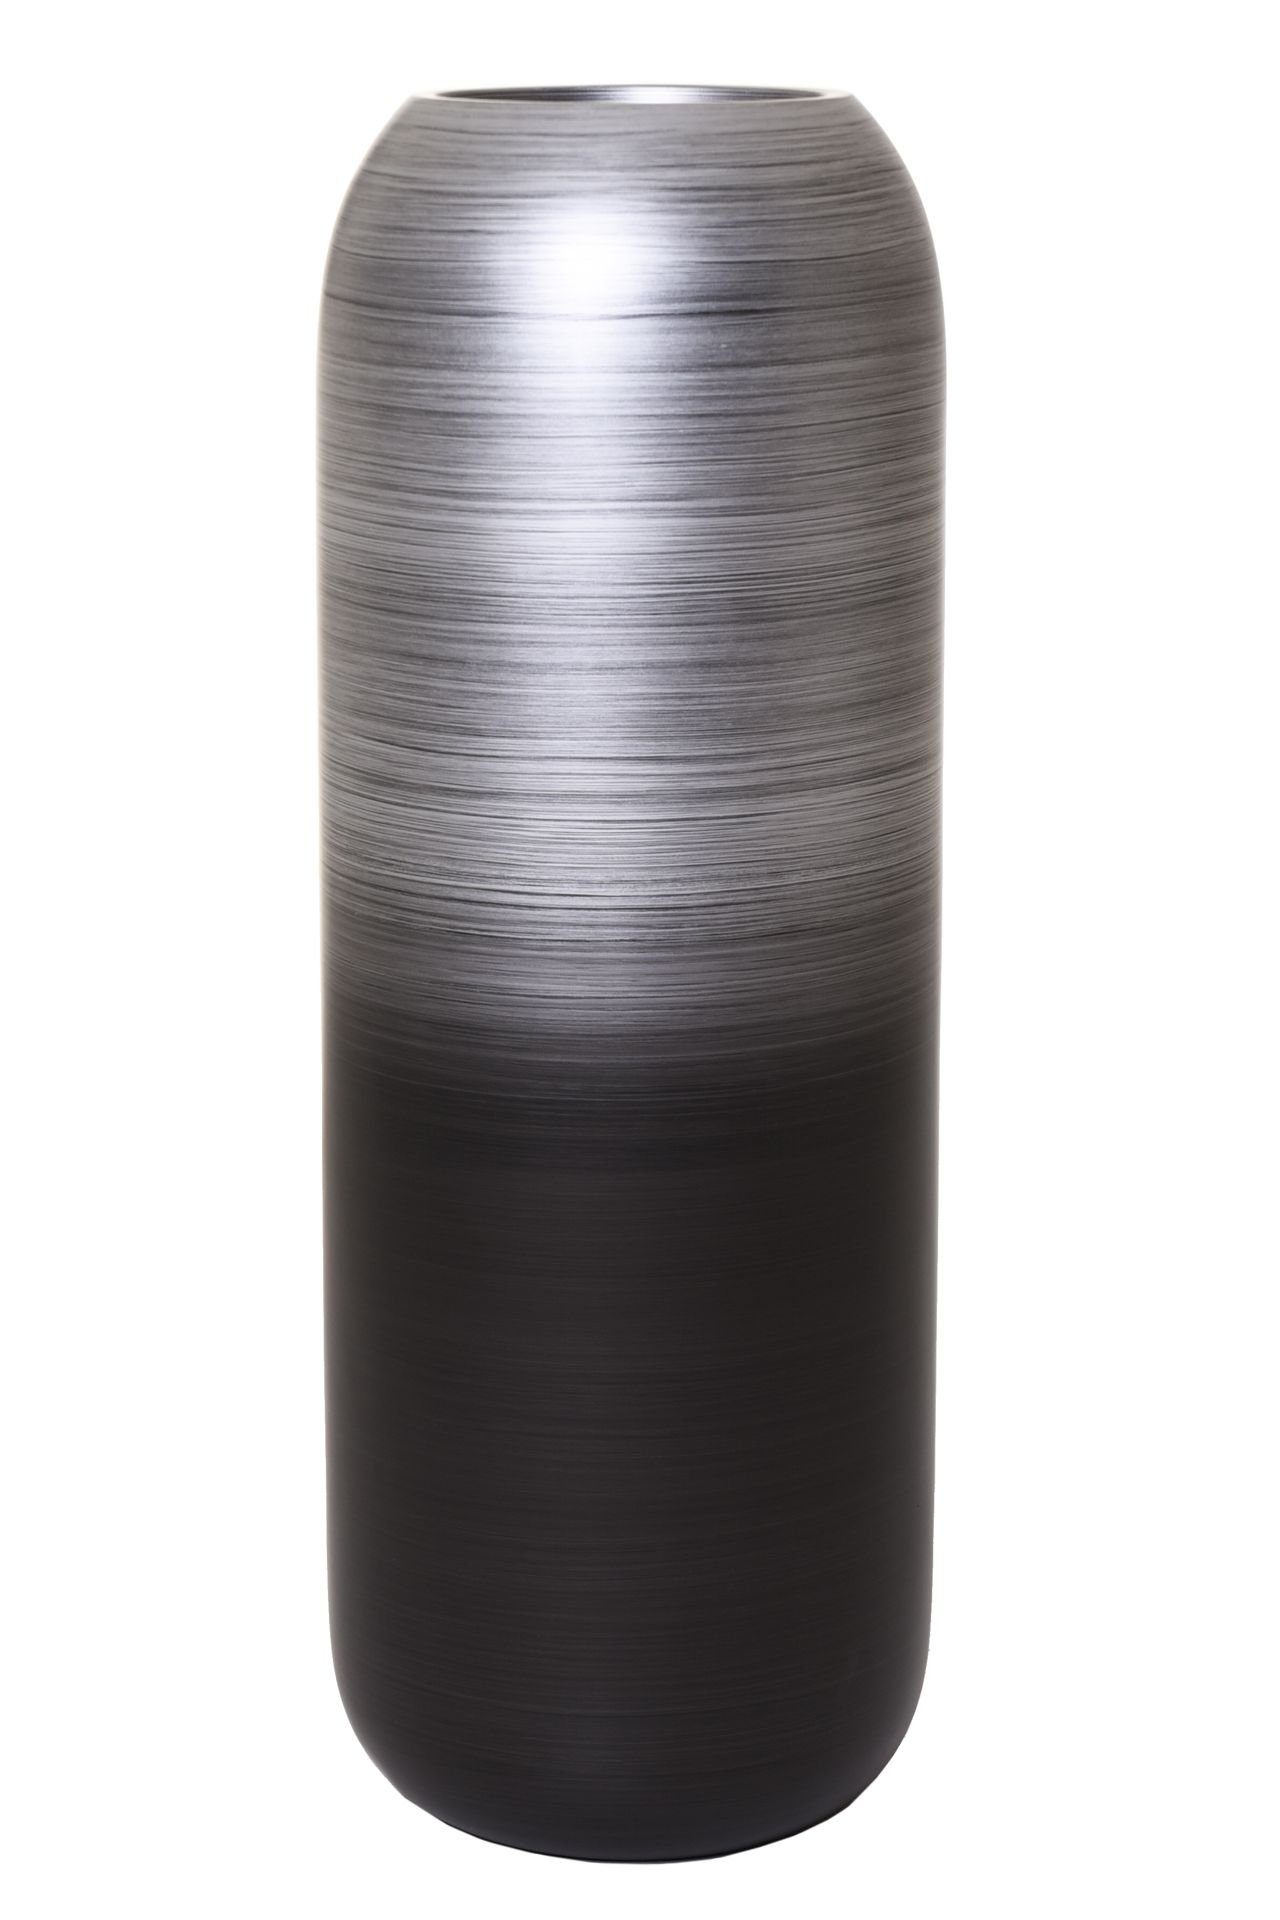 VIVANNO Bodenvase Bodenvase Pflanzkübel Fiberglas Silber Schwarz Seidenmatt CHRONO - Schwarz-Silber